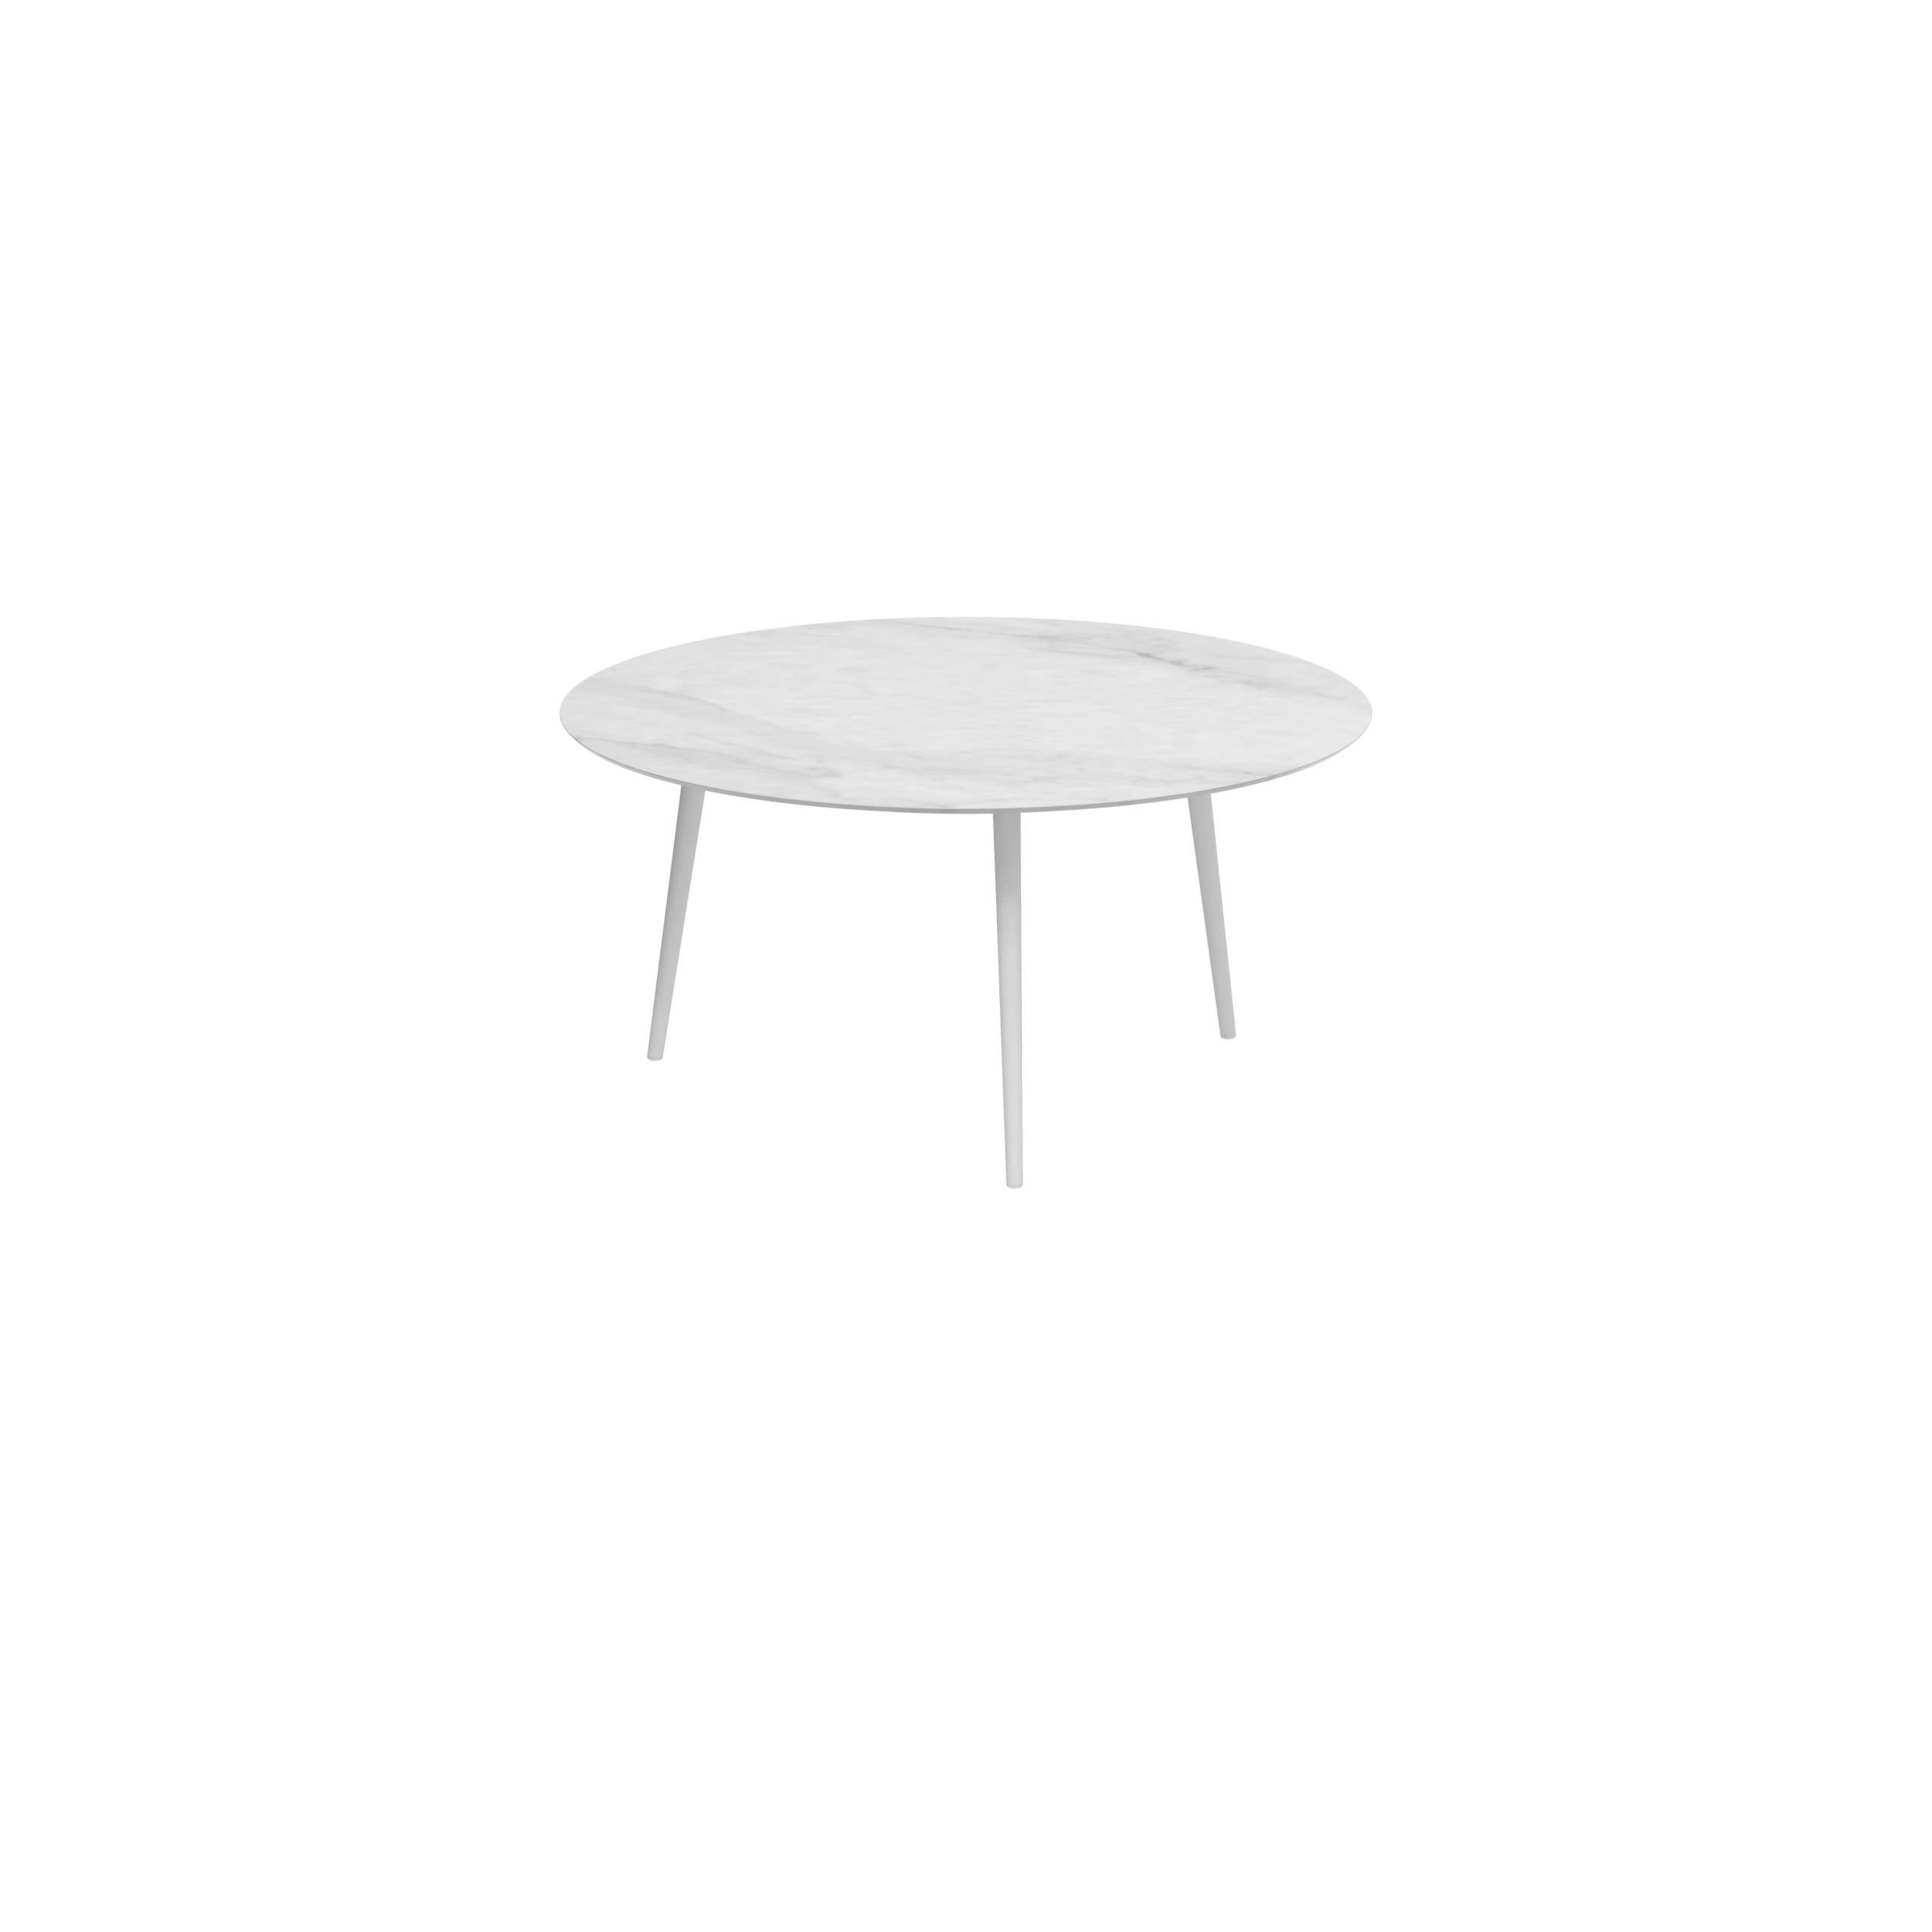 Styletto Standard Dining Table Ø 160cm Alu Legs White Ceramic Top Bianco Statuario